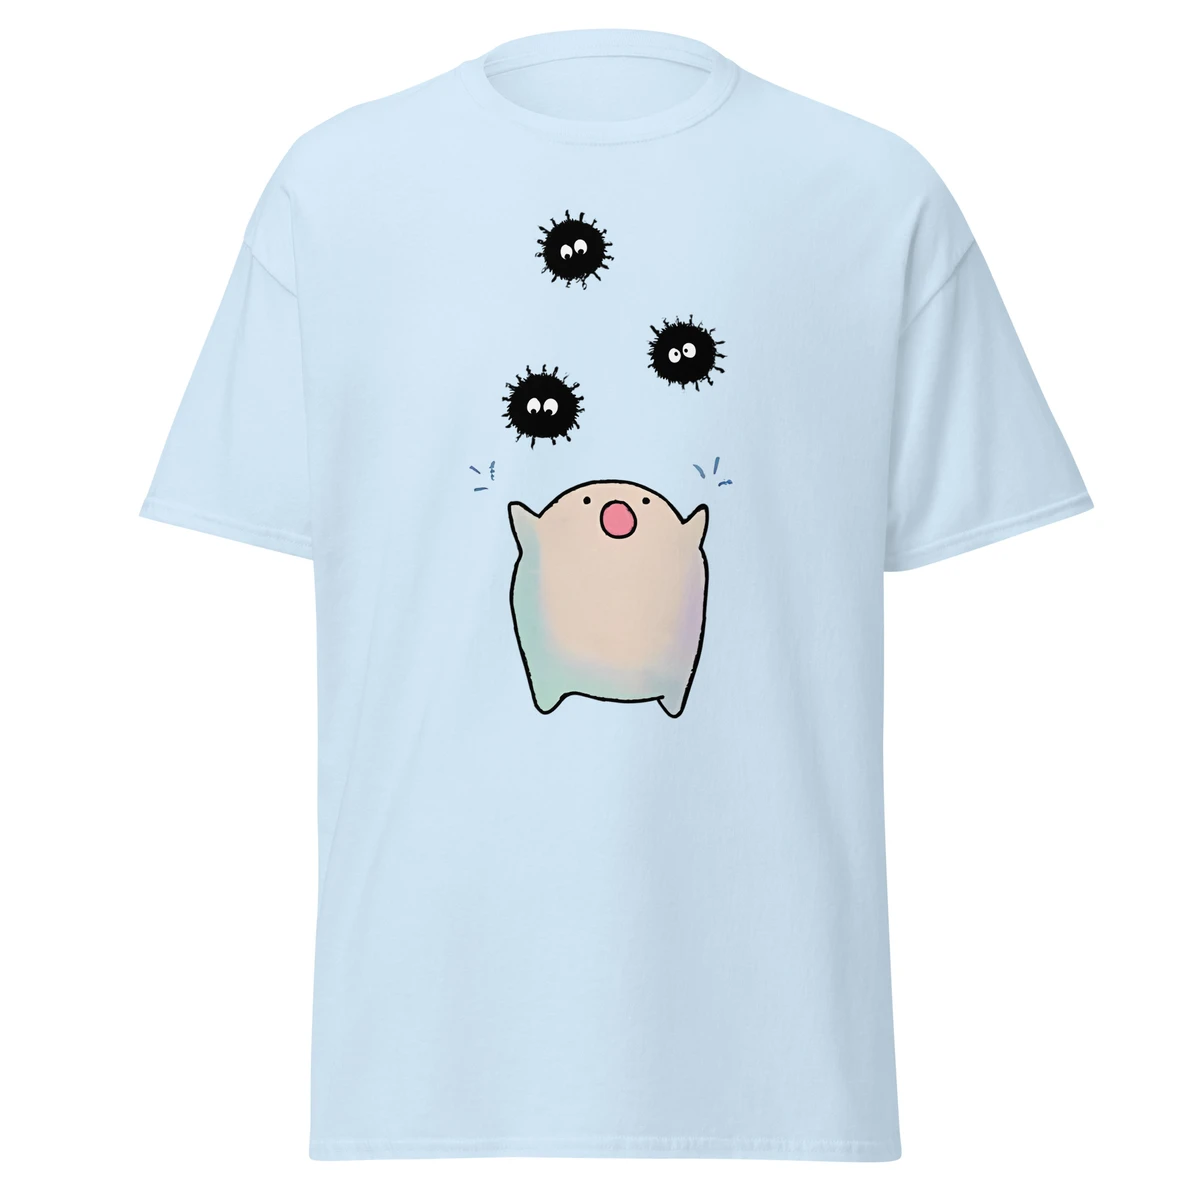 Warawara and Soot Sprites Chibi Fanart T Shirt - Ghibli Merch Store - Official Studio Ghibli Merchandise